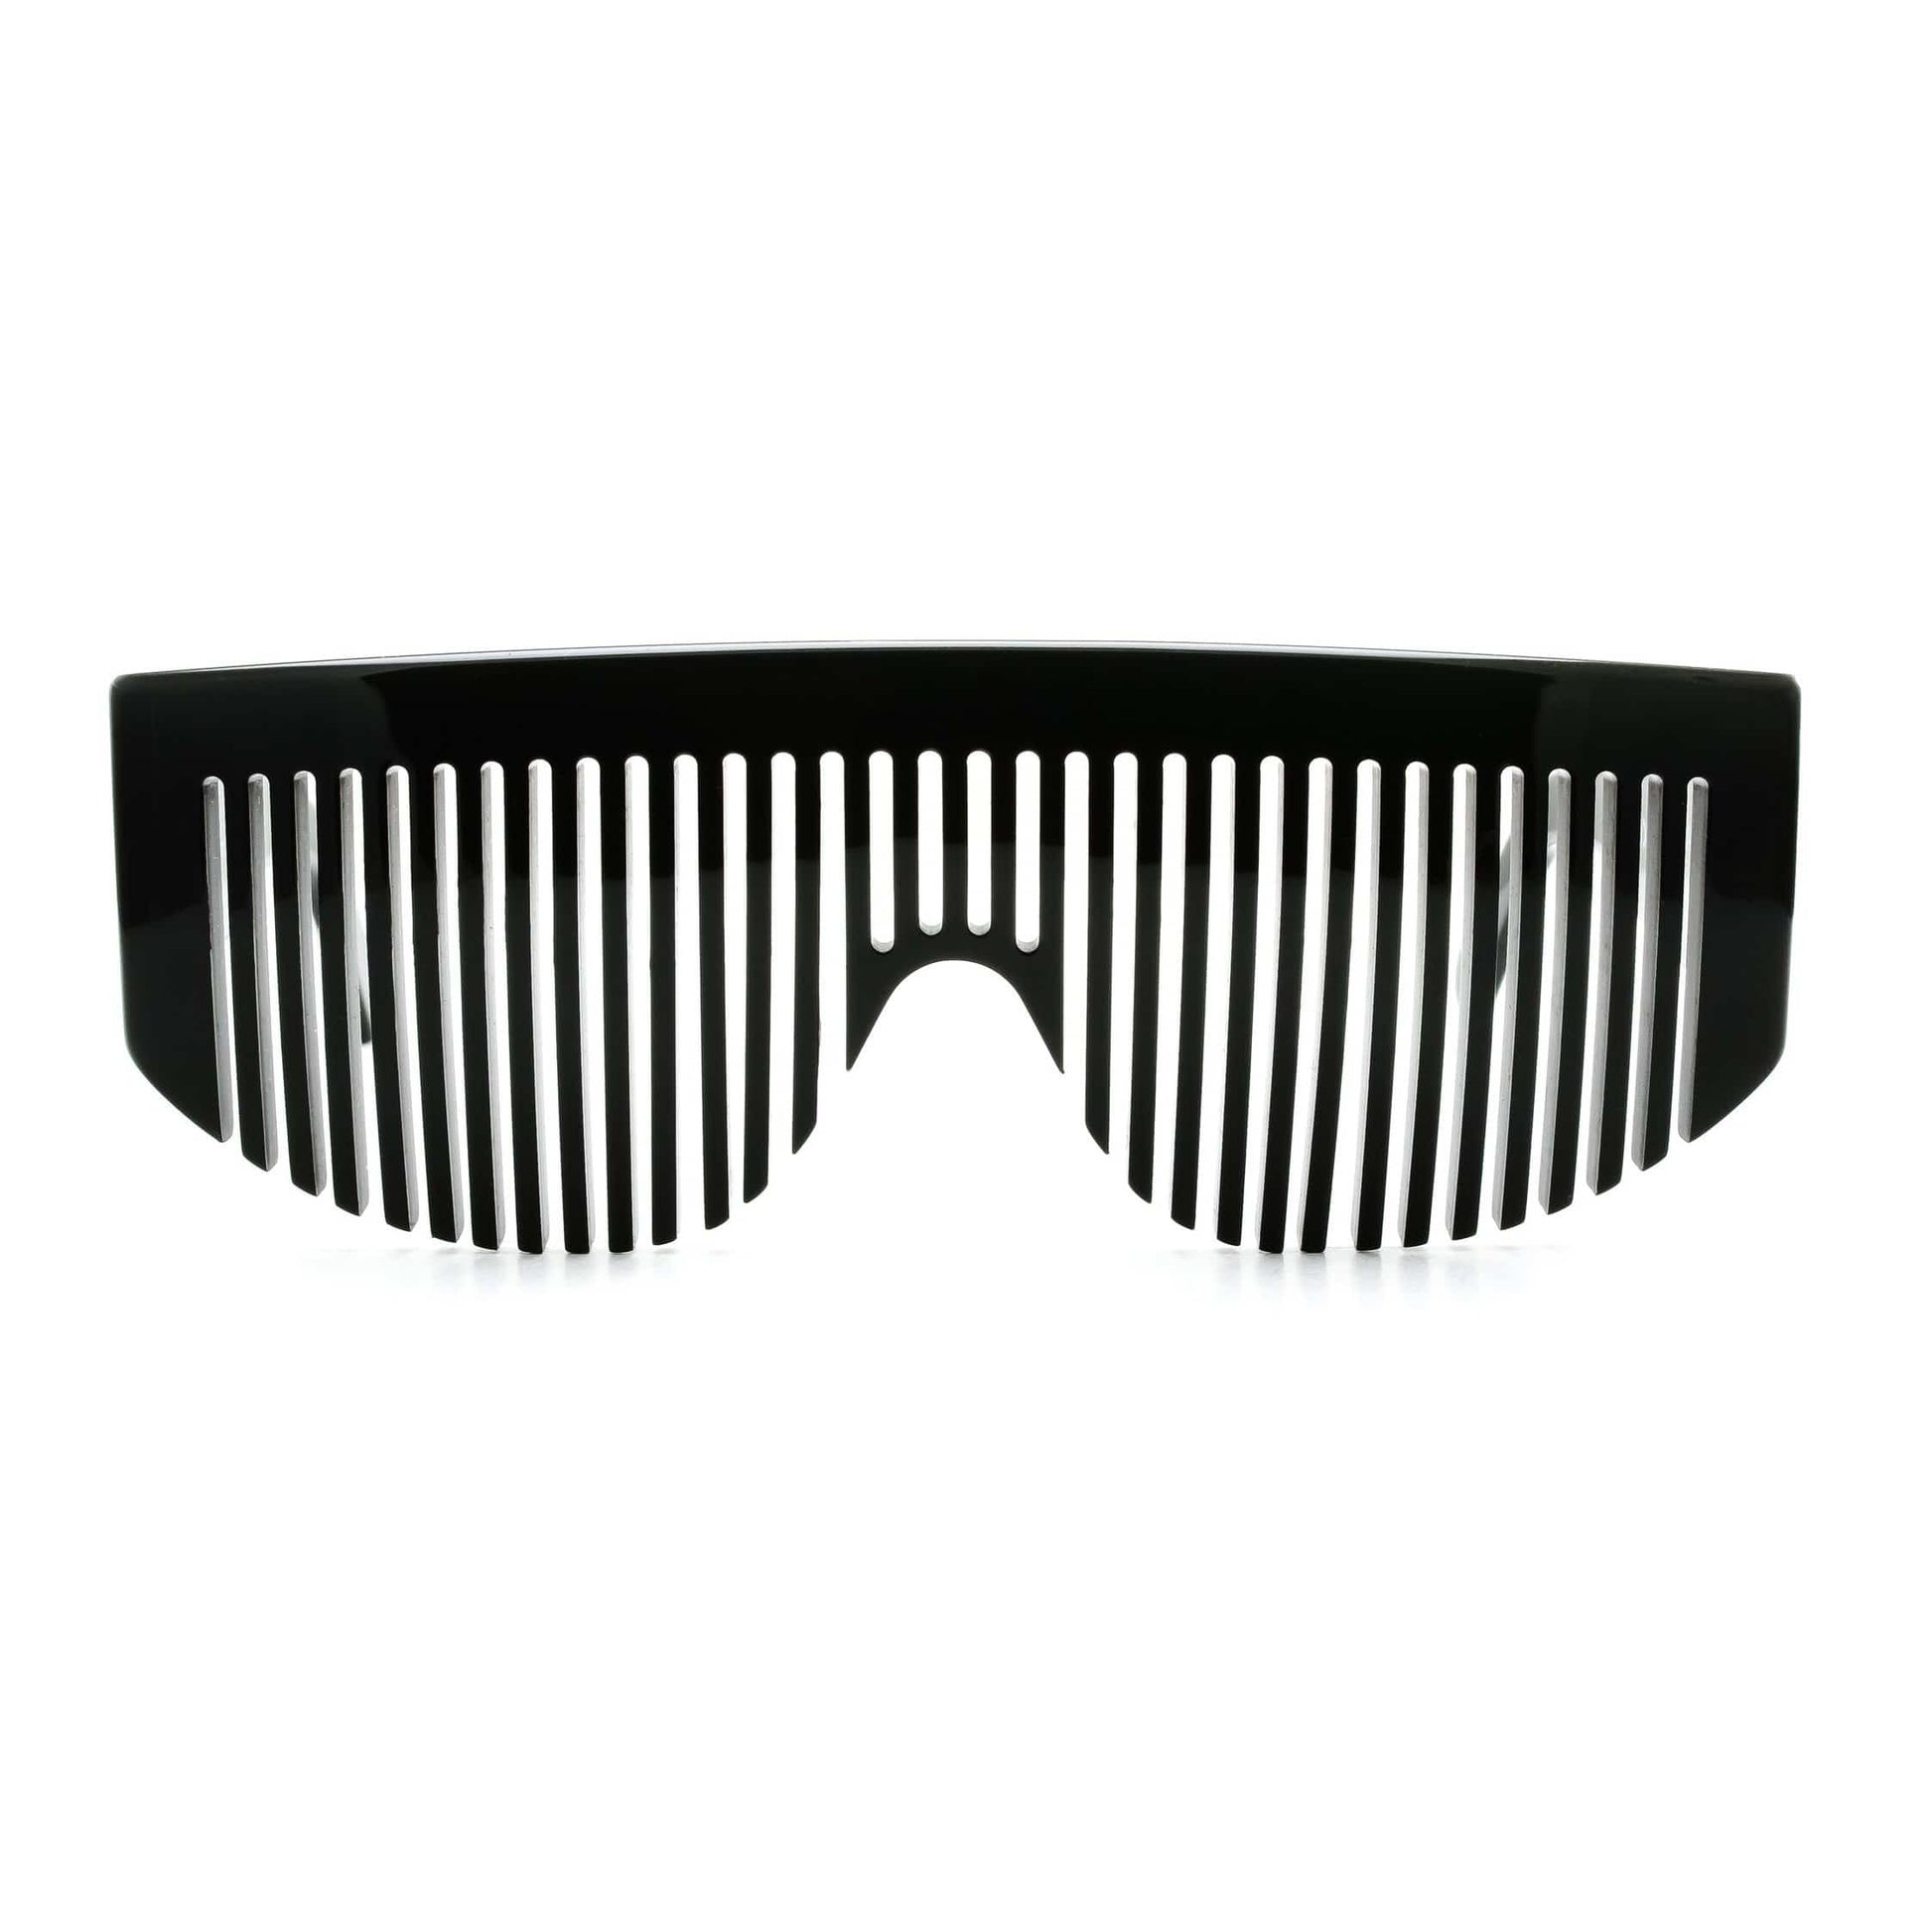 Vintage 1993 Iconic CHANEL PARIS Lens Round Black Sunglasses -  Israel